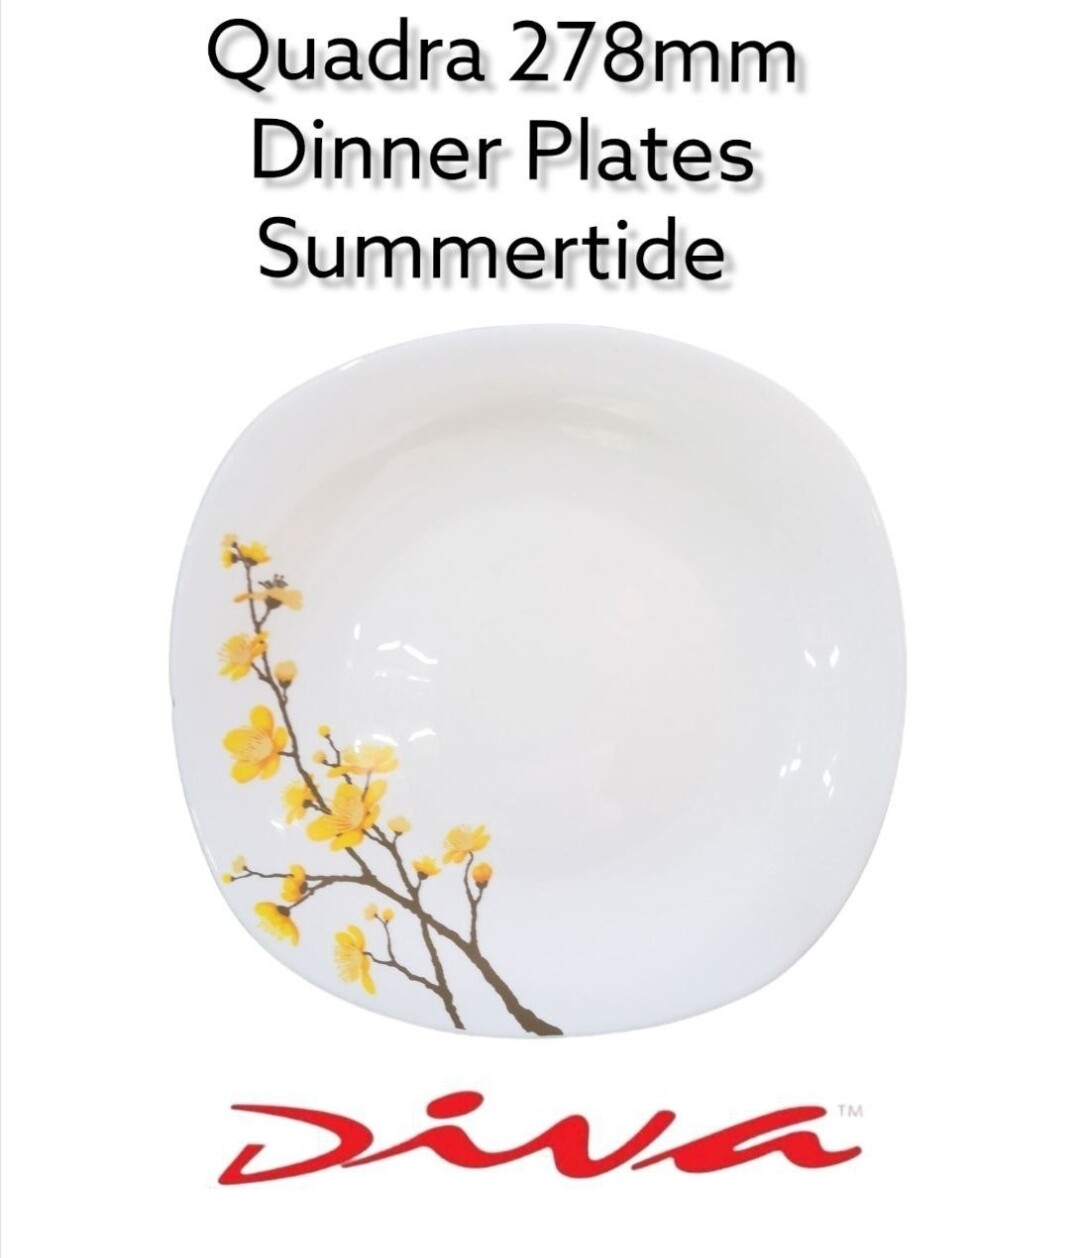 Diva 11" Quadra Square Dinner Plates Summertide 3pcs